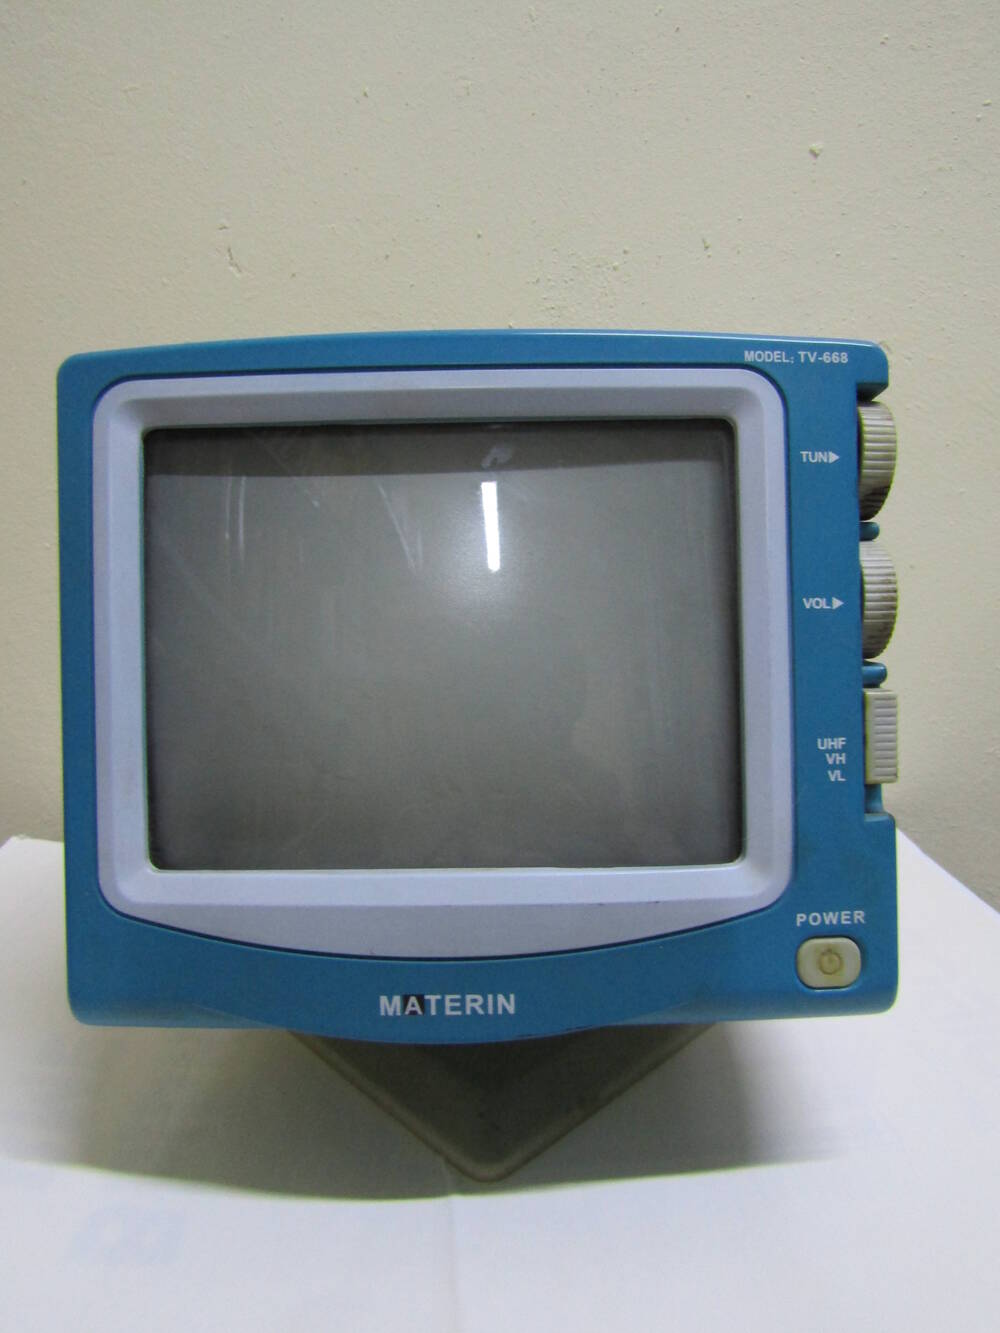 Телевизор мини MATERIN. Модель ТВ-668